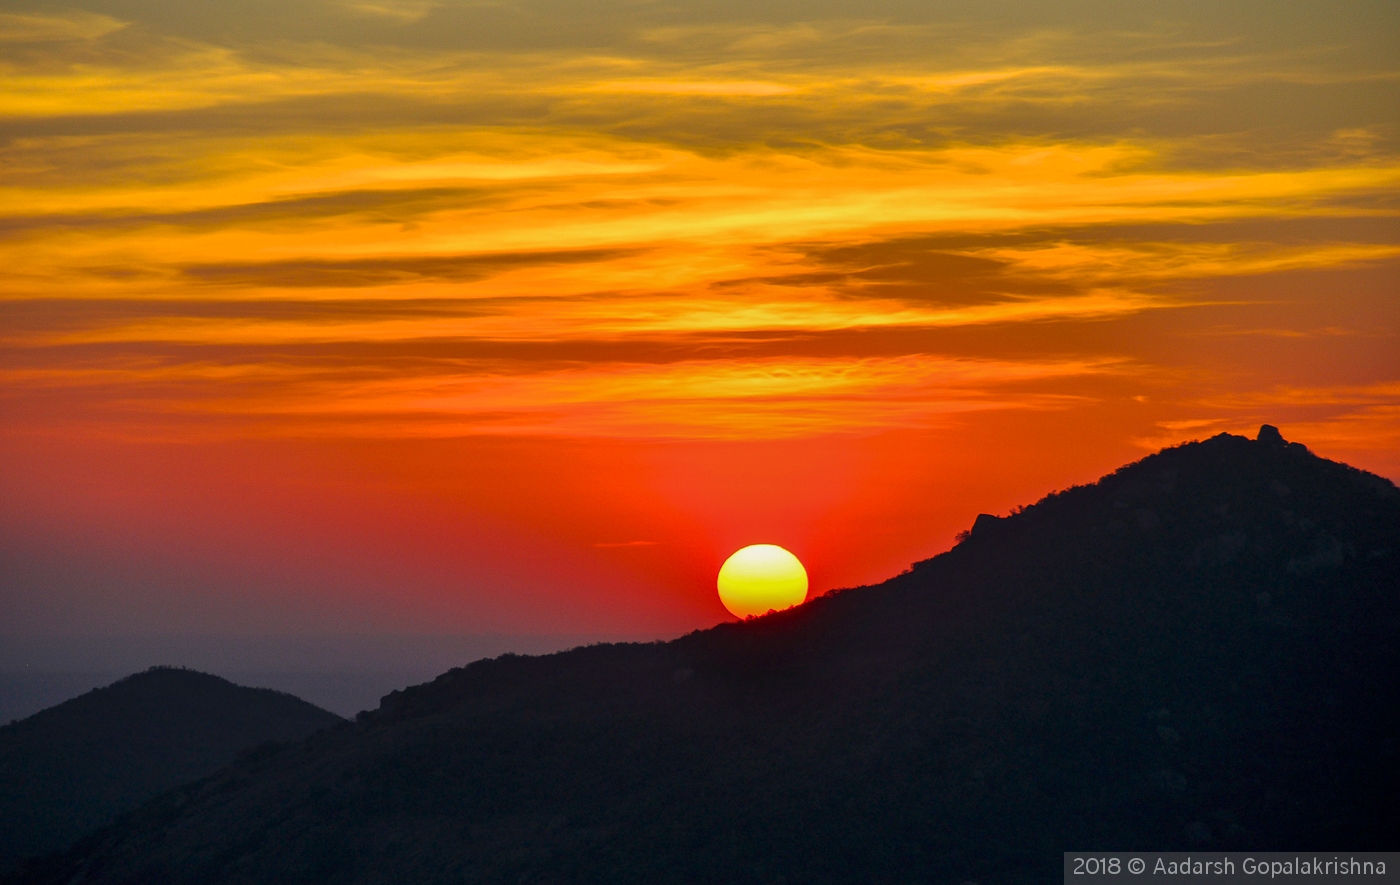 Sunset over the hills - Tumkur, India by Aadarsh Gopalakrishna